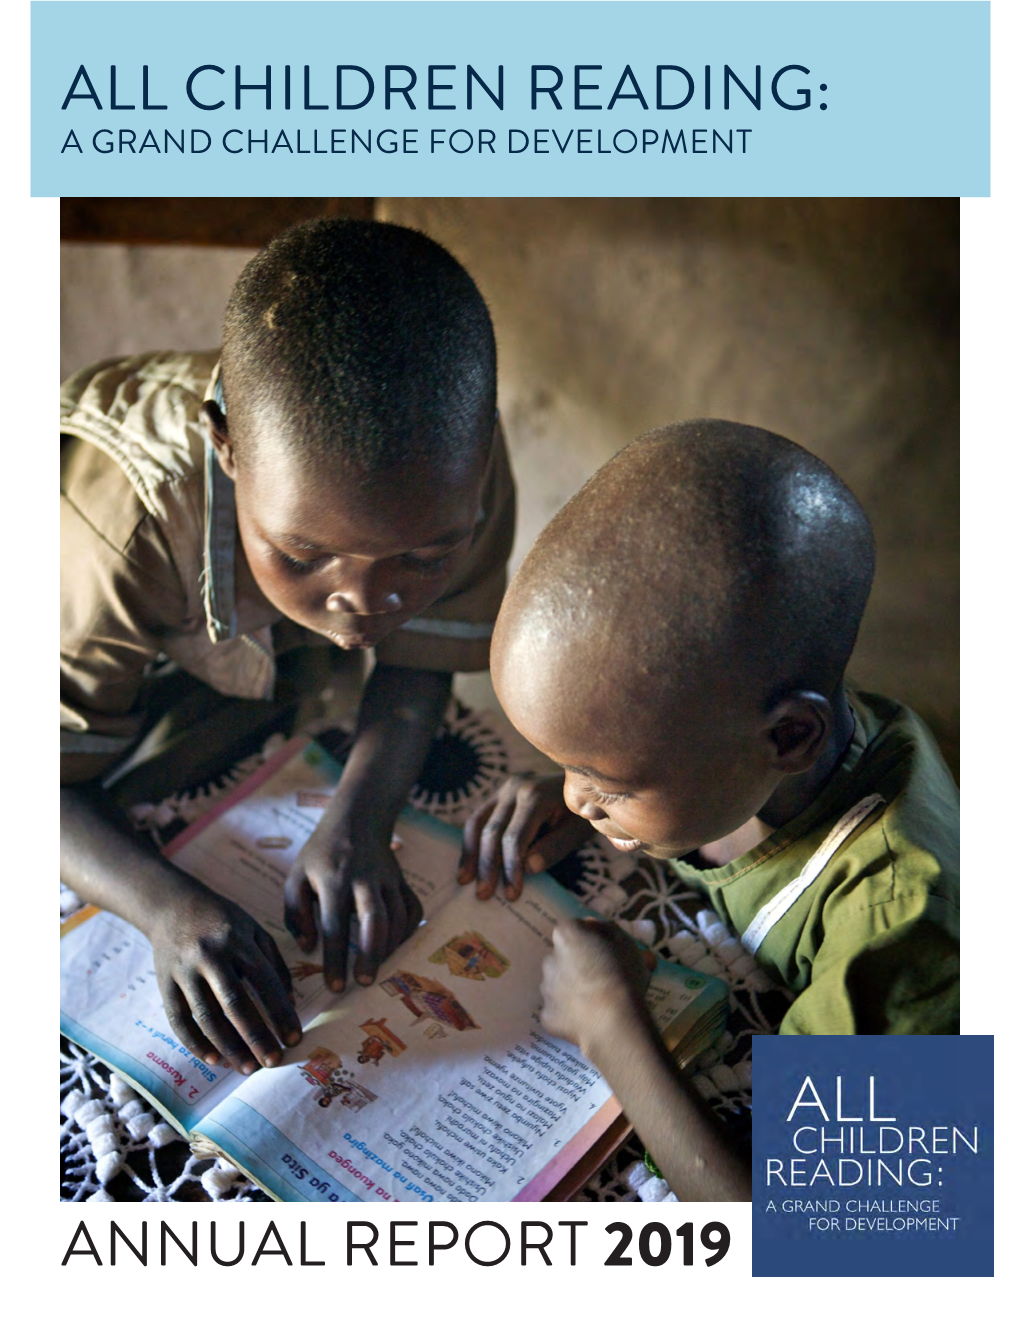 All Children Reading 2019 Annual Report